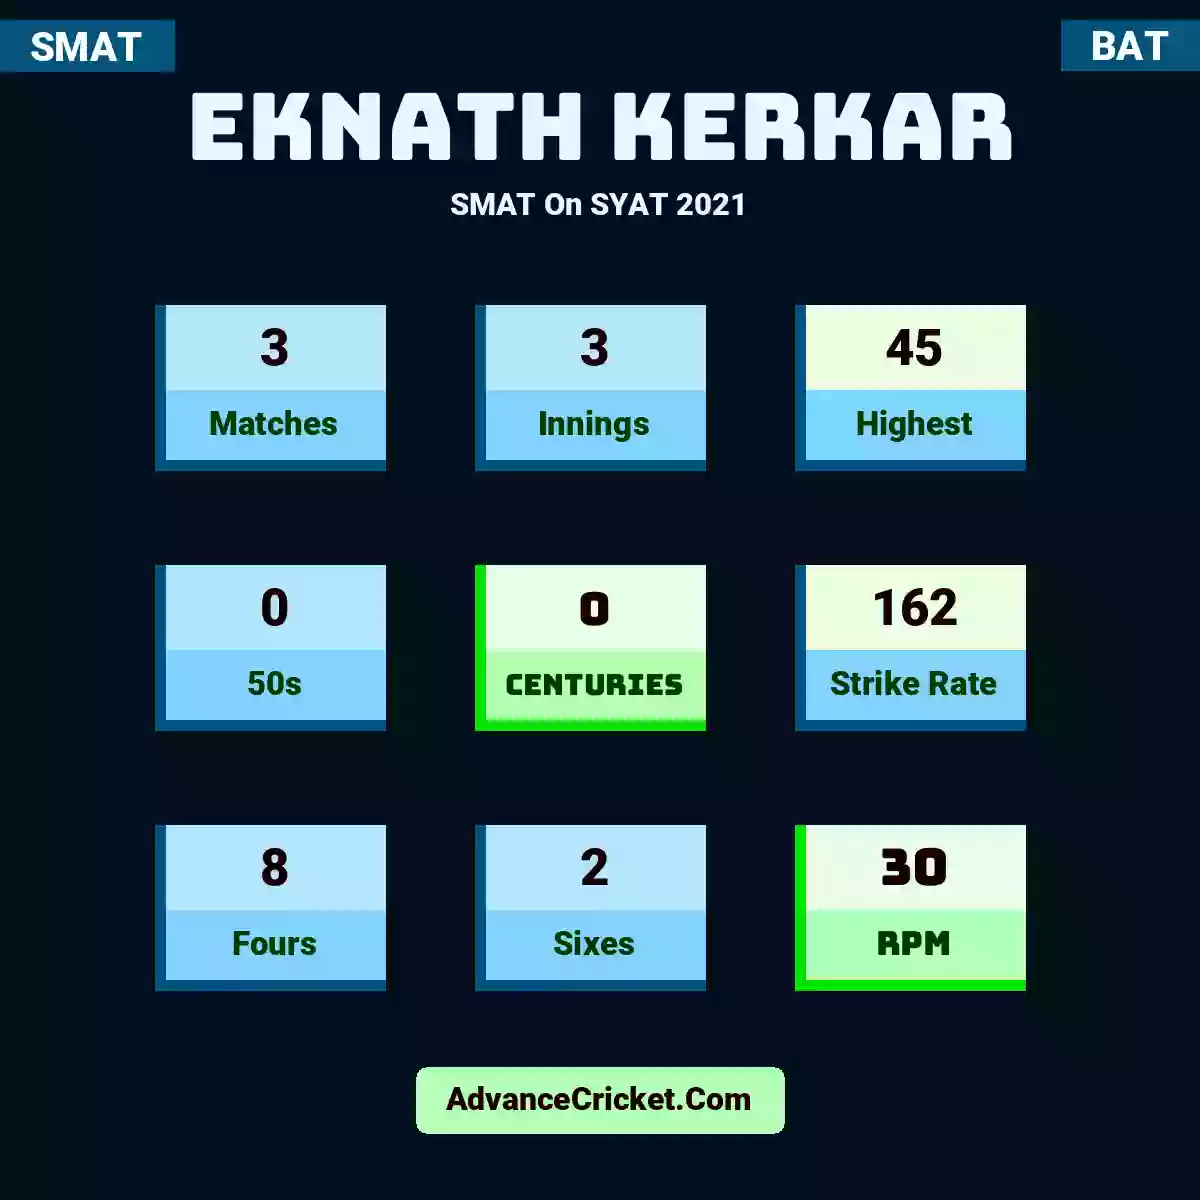 Eknath Kerkar SMAT  On SYAT 2021, Eknath Kerkar played 3 matches, scored 45 runs as highest, 0 half-centuries, and 0 centuries, with a strike rate of 162. E.Kerkar hit 8 fours and 2 sixes, with an RPM of 30.